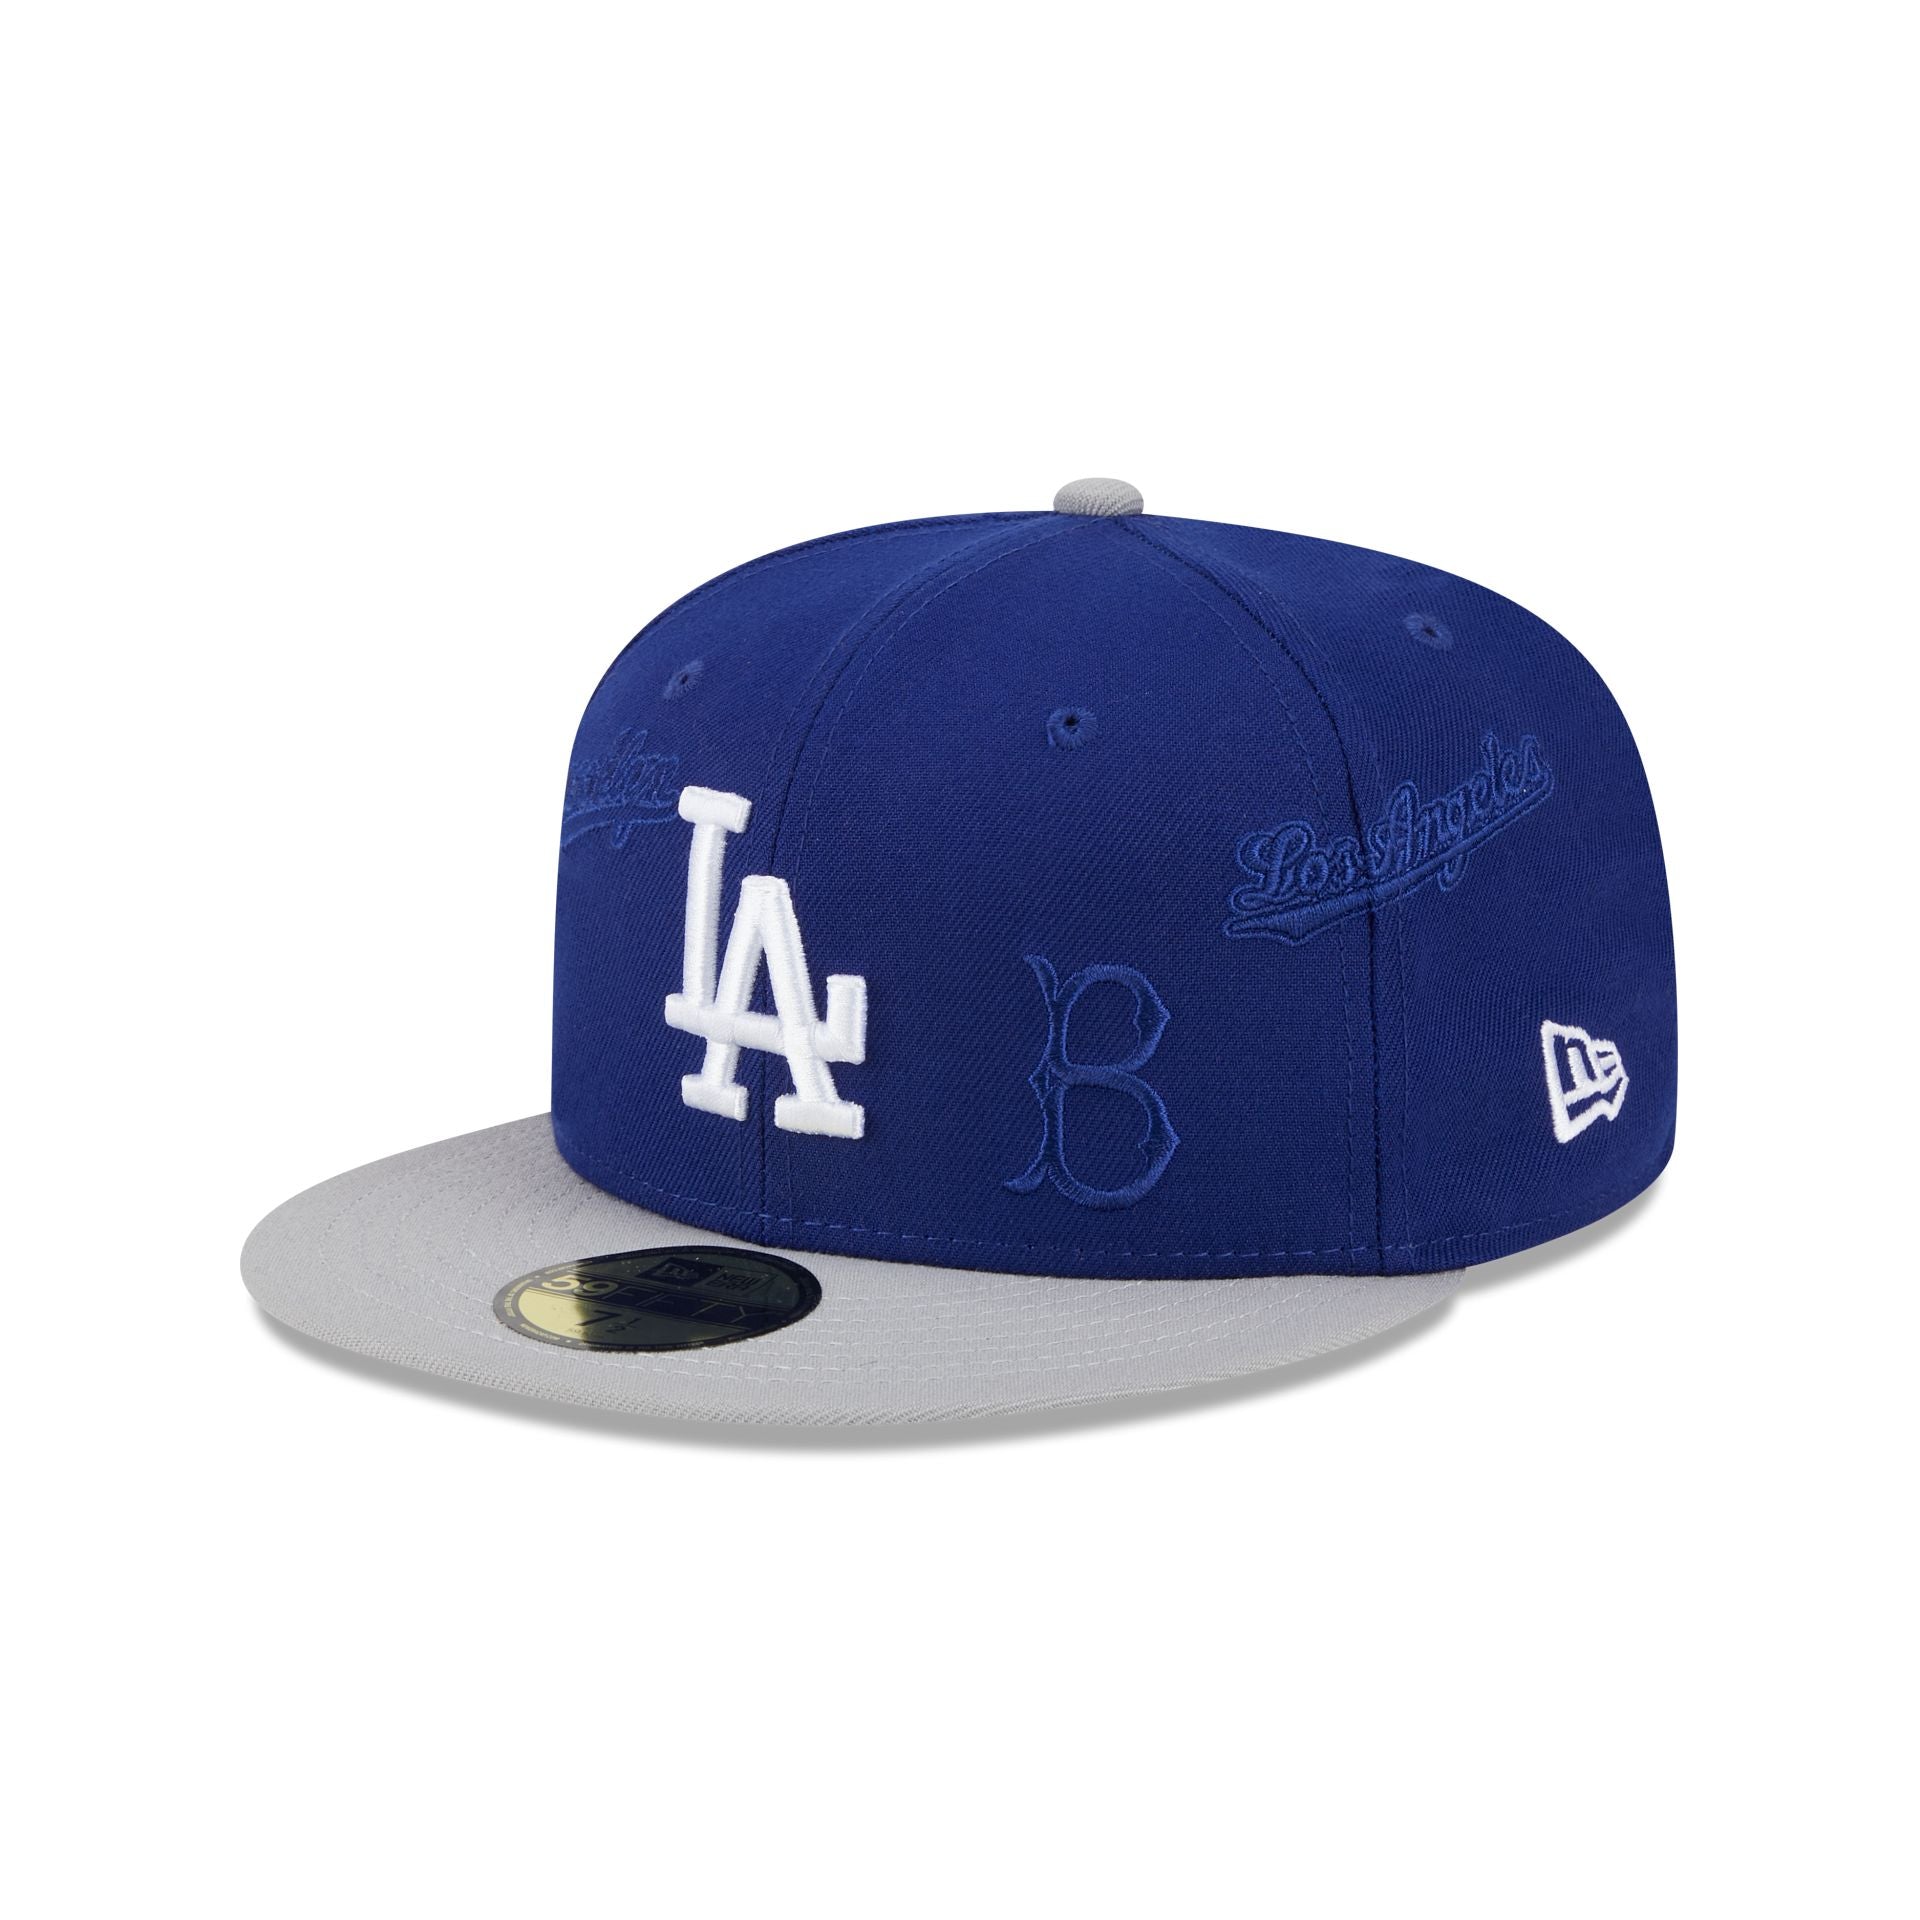 Gorra New Era 950 Los Angeles Dodgers Basic Snapback Hat (Black